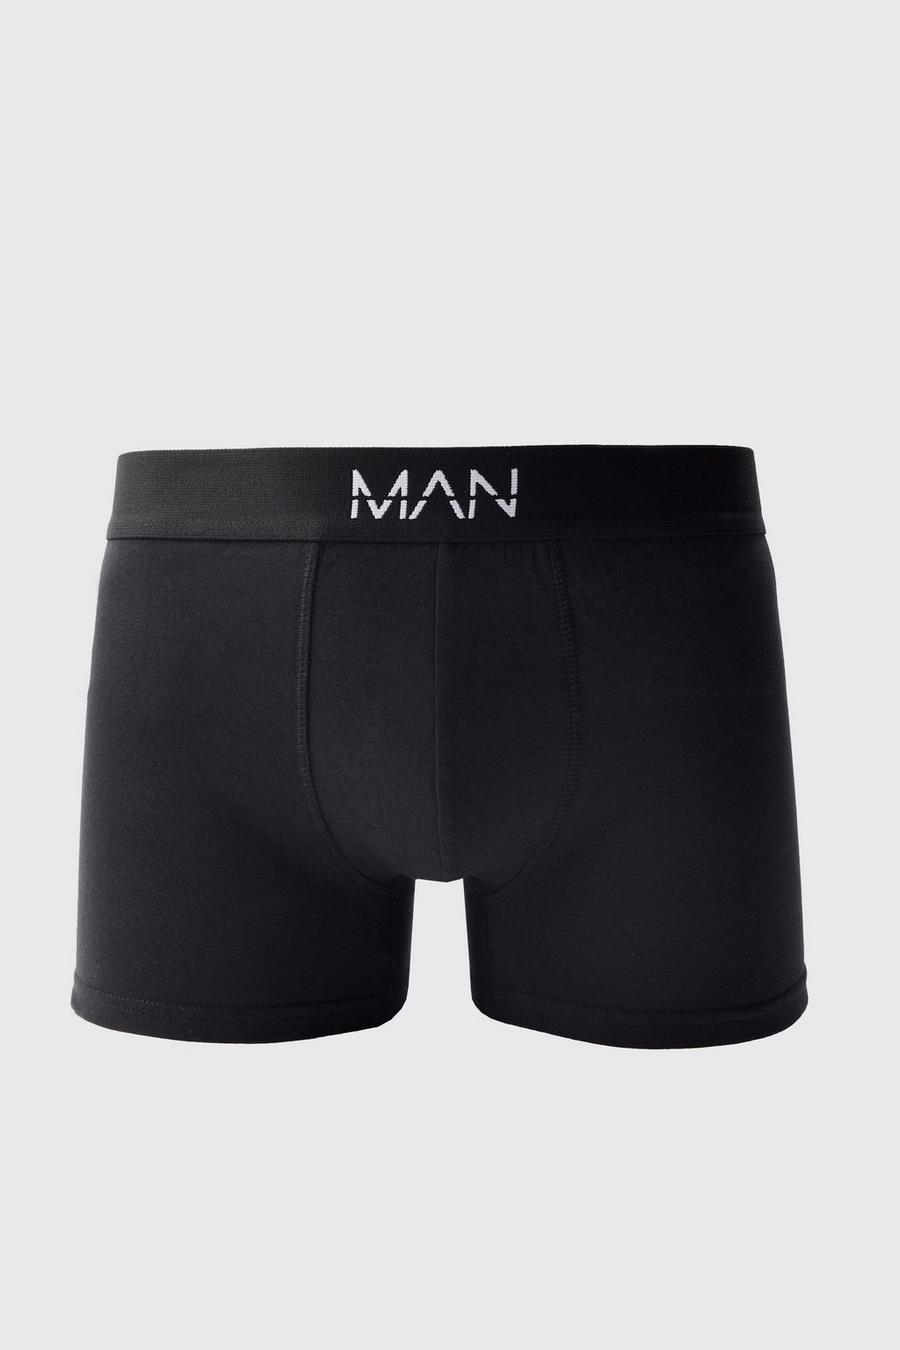 Black Man Dash Woven Boxer Short